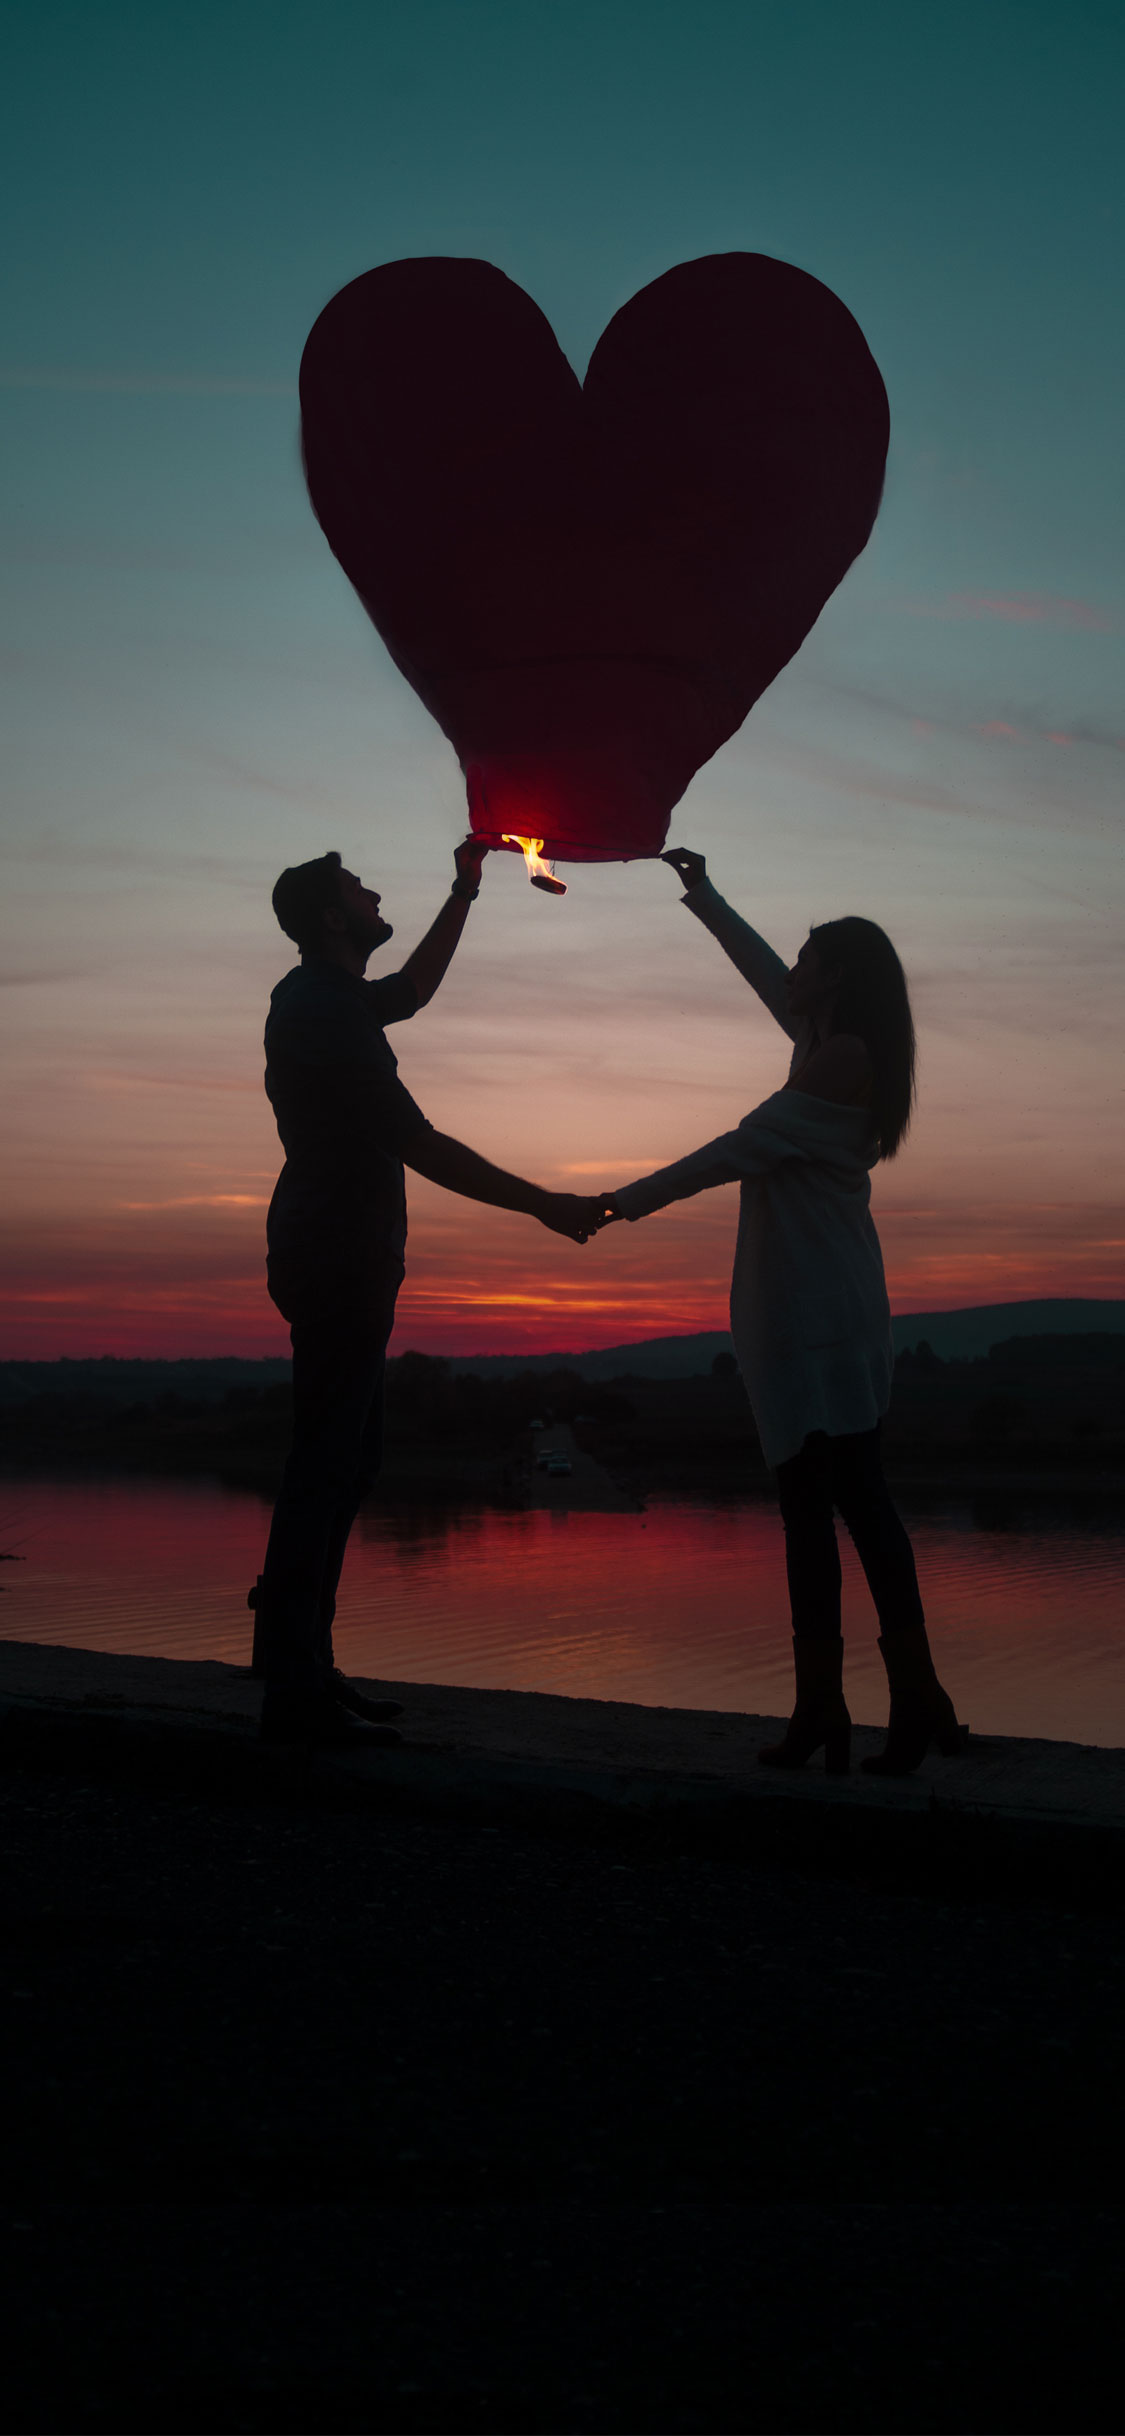 couple wallpaper iphone,sky,hot air ballooning,hot air balloon,balloon,love